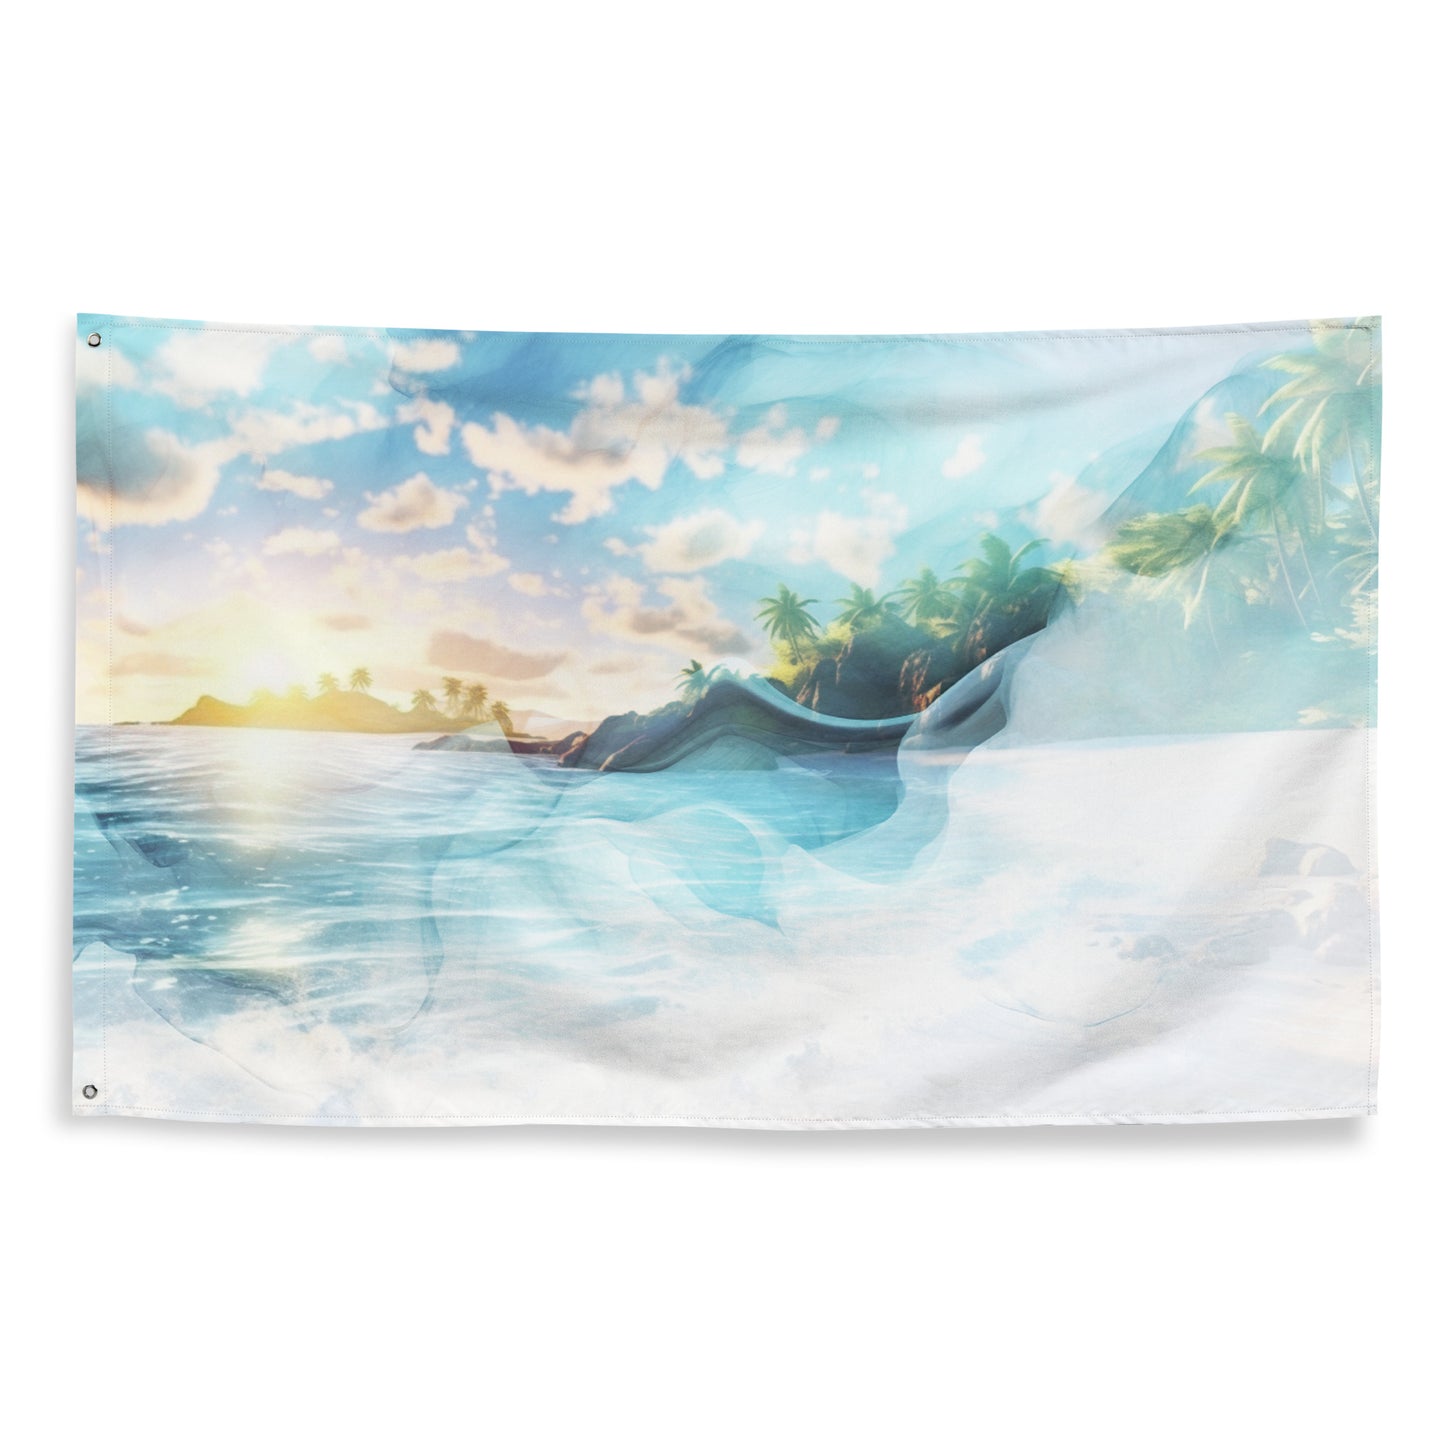 Vivid Dreams Tropical Beach Wall Flag - Dreamscape Collection by Neduz Designs